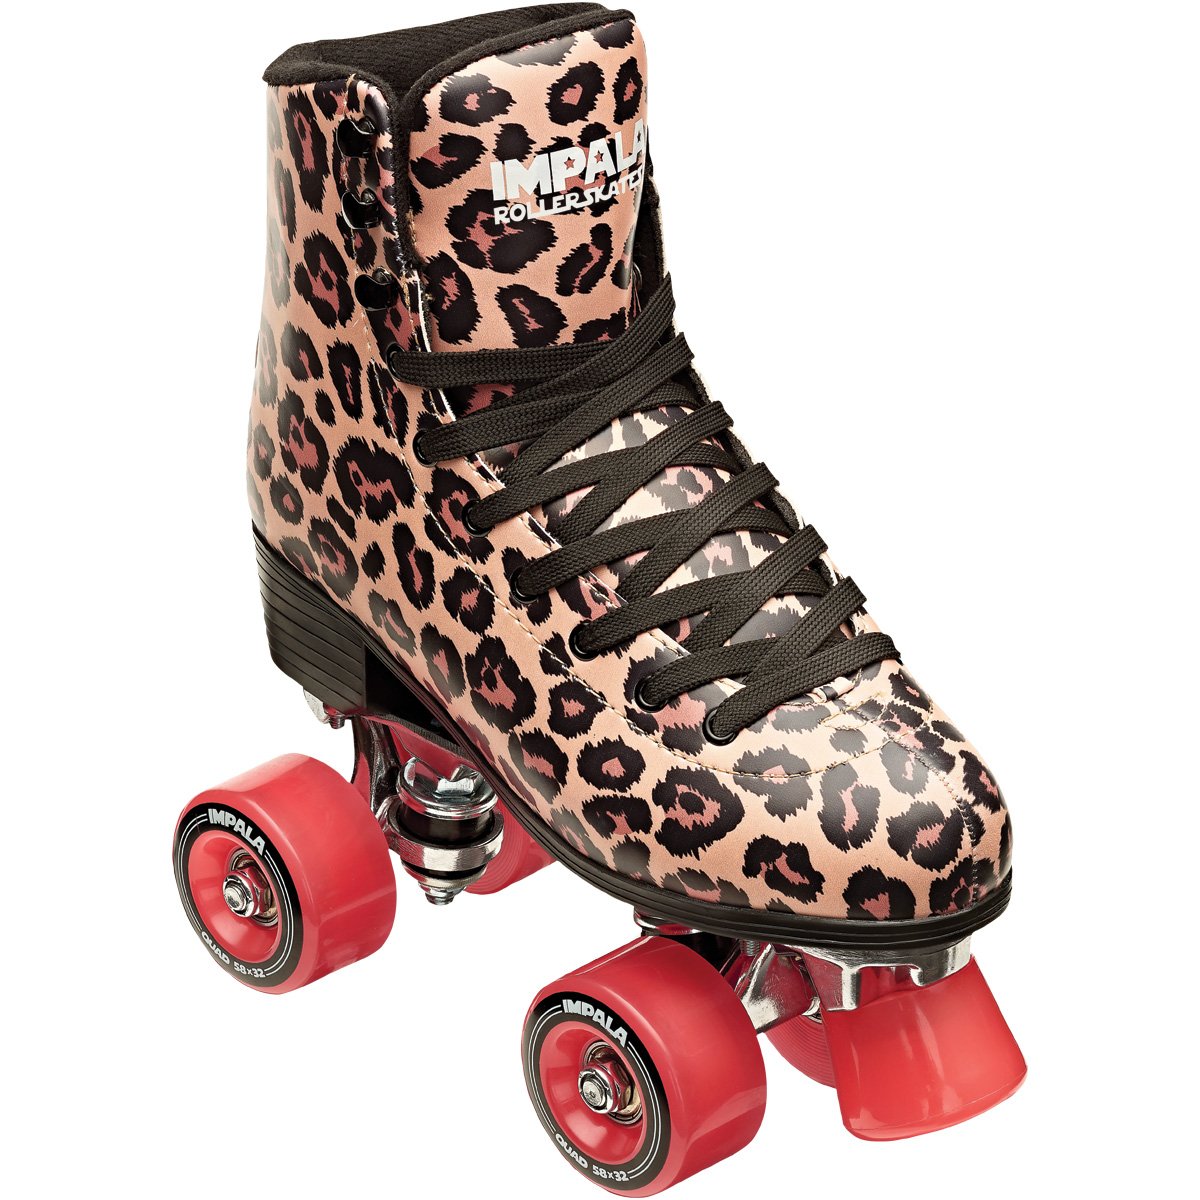 IMPALA ROLLER SKATES - Quad Skate, Leopard